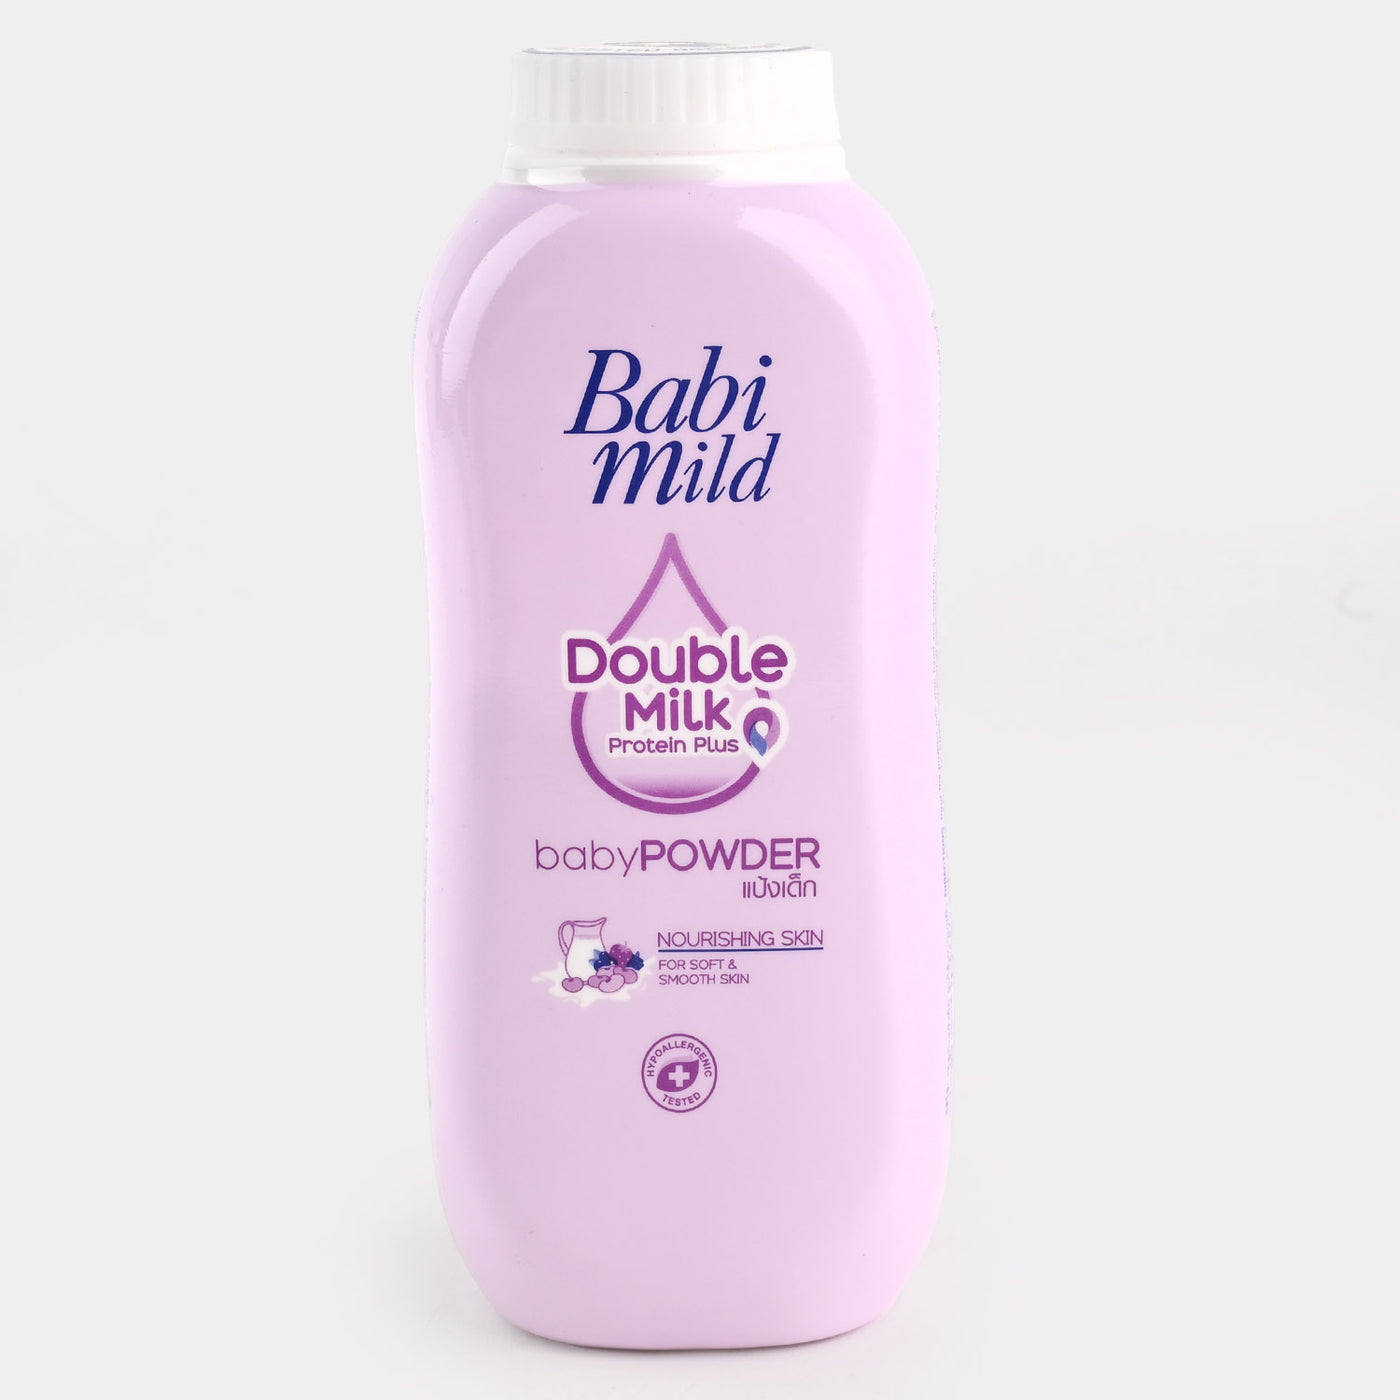 Babi Mild Baby Powder Double Milk 160gm